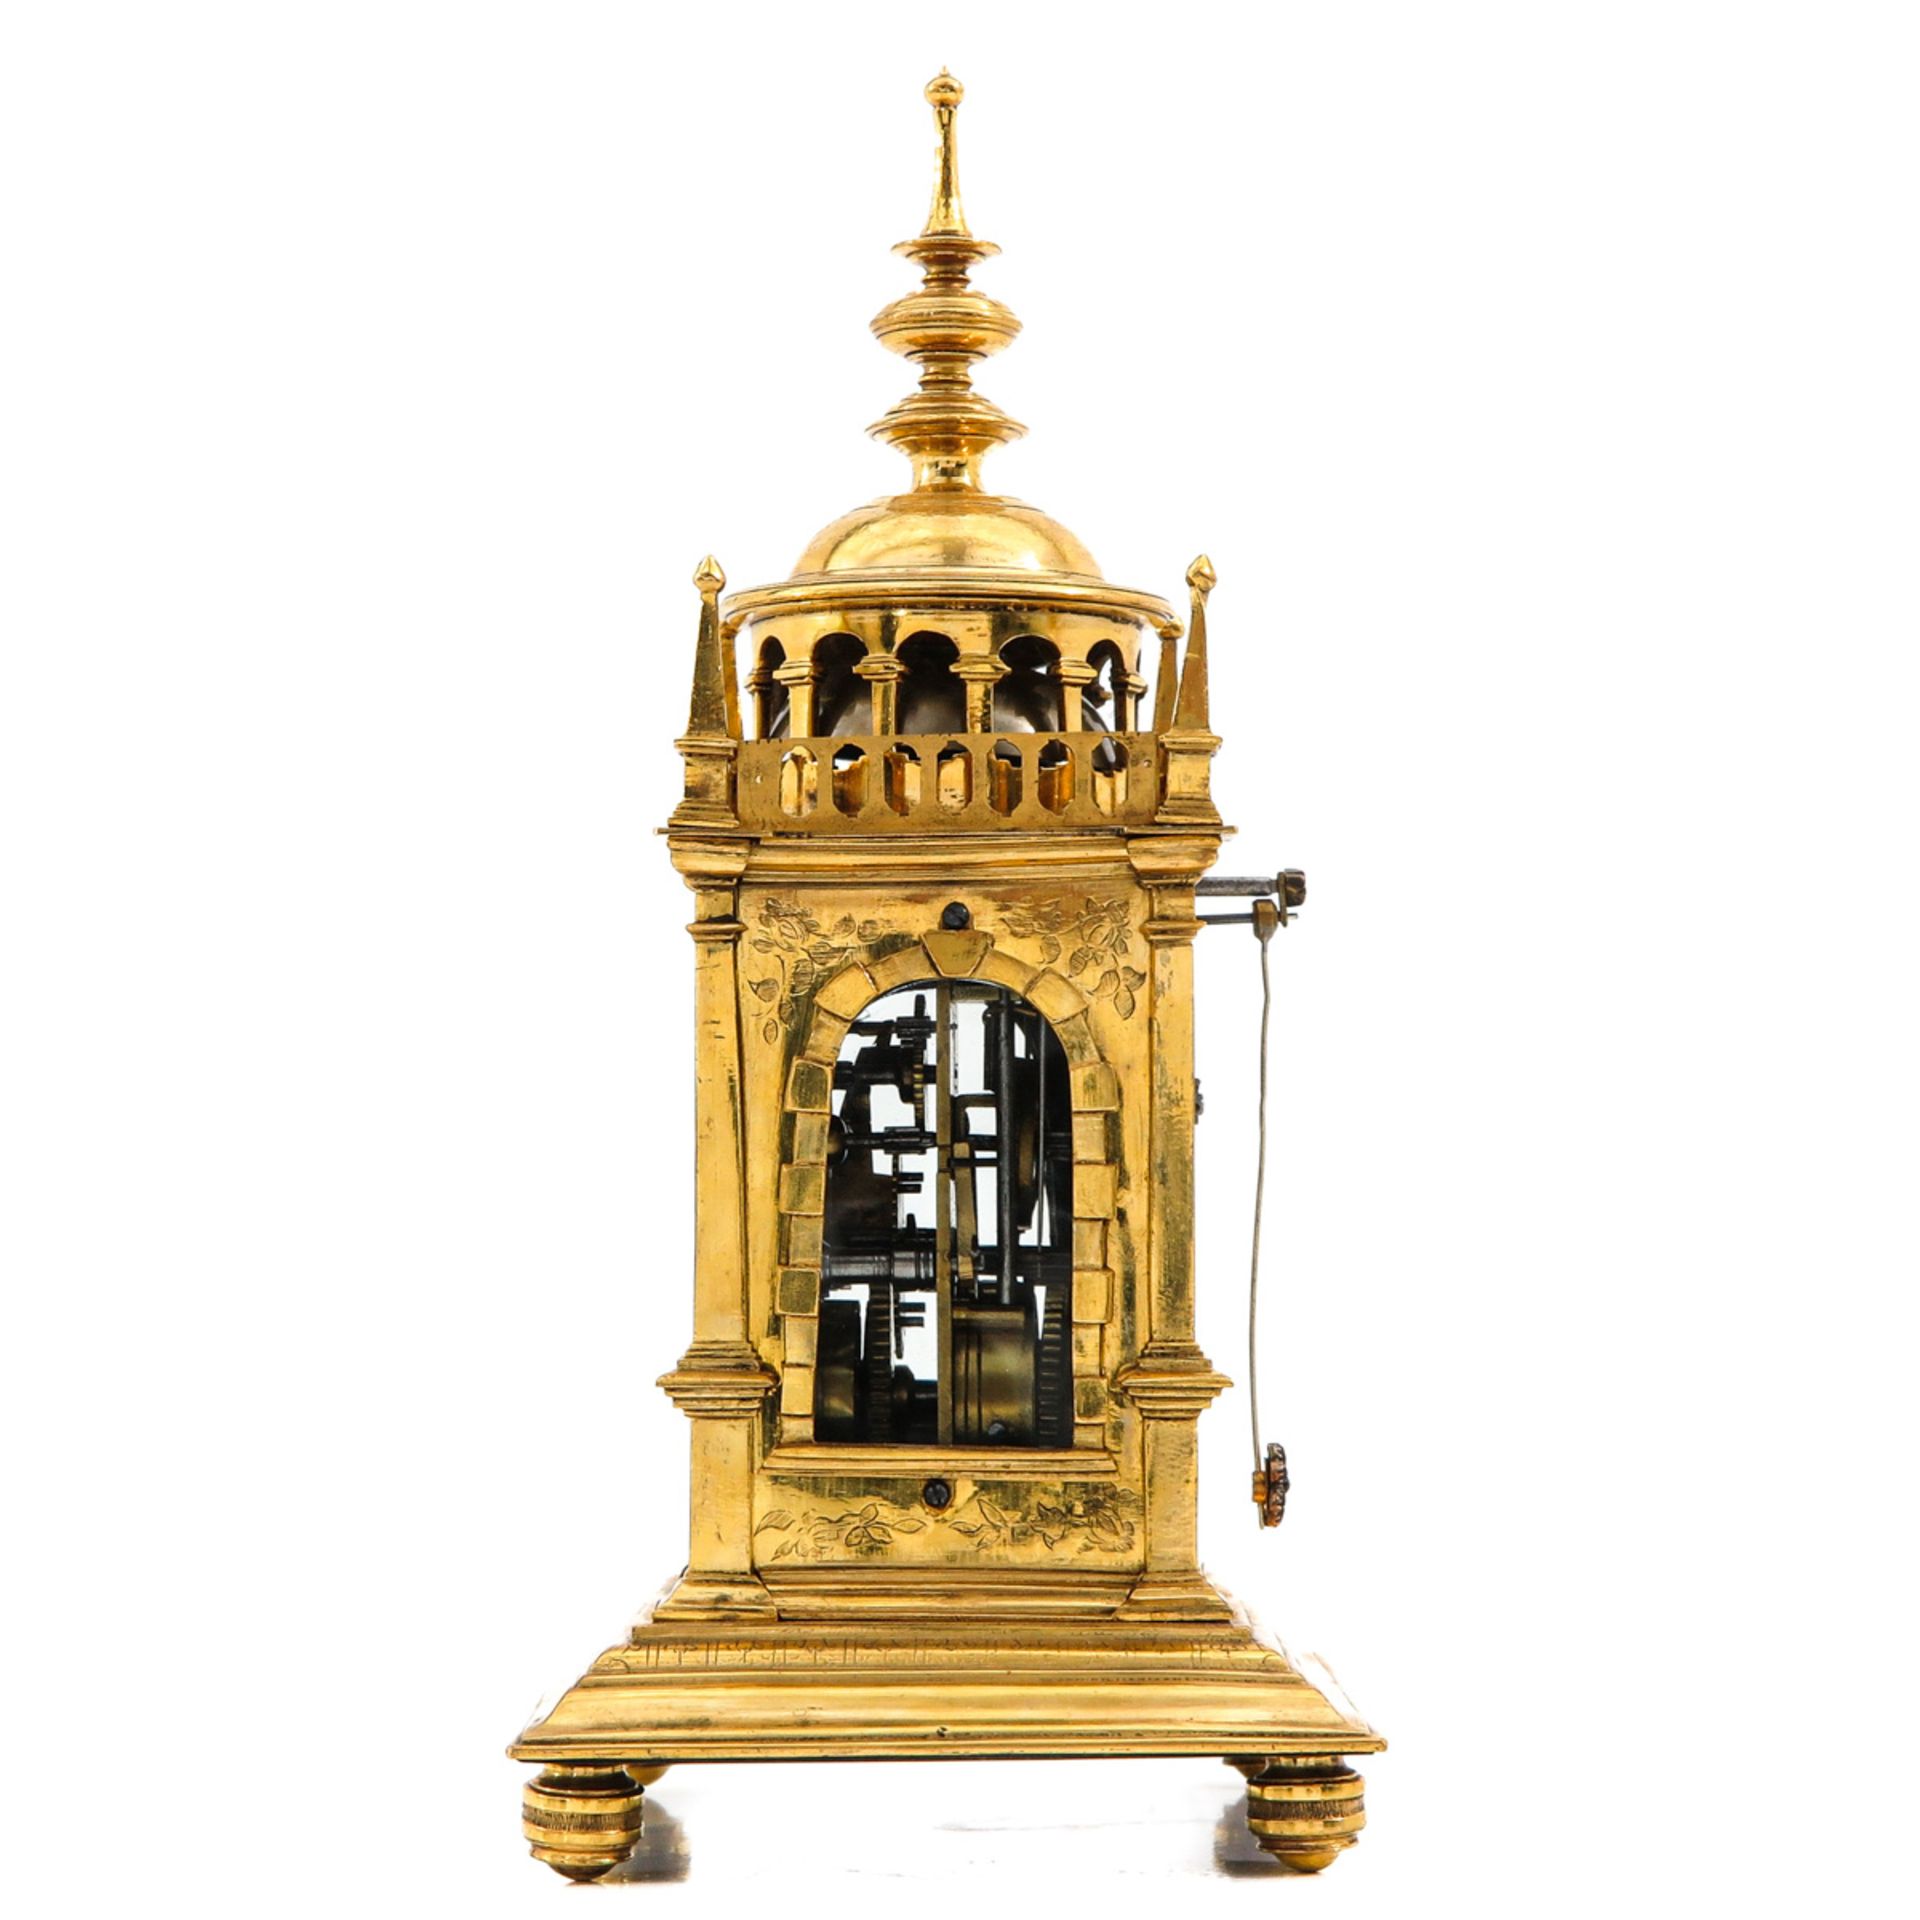 A 17th Century Gilded Turmuhr Clock - Image 4 of 10